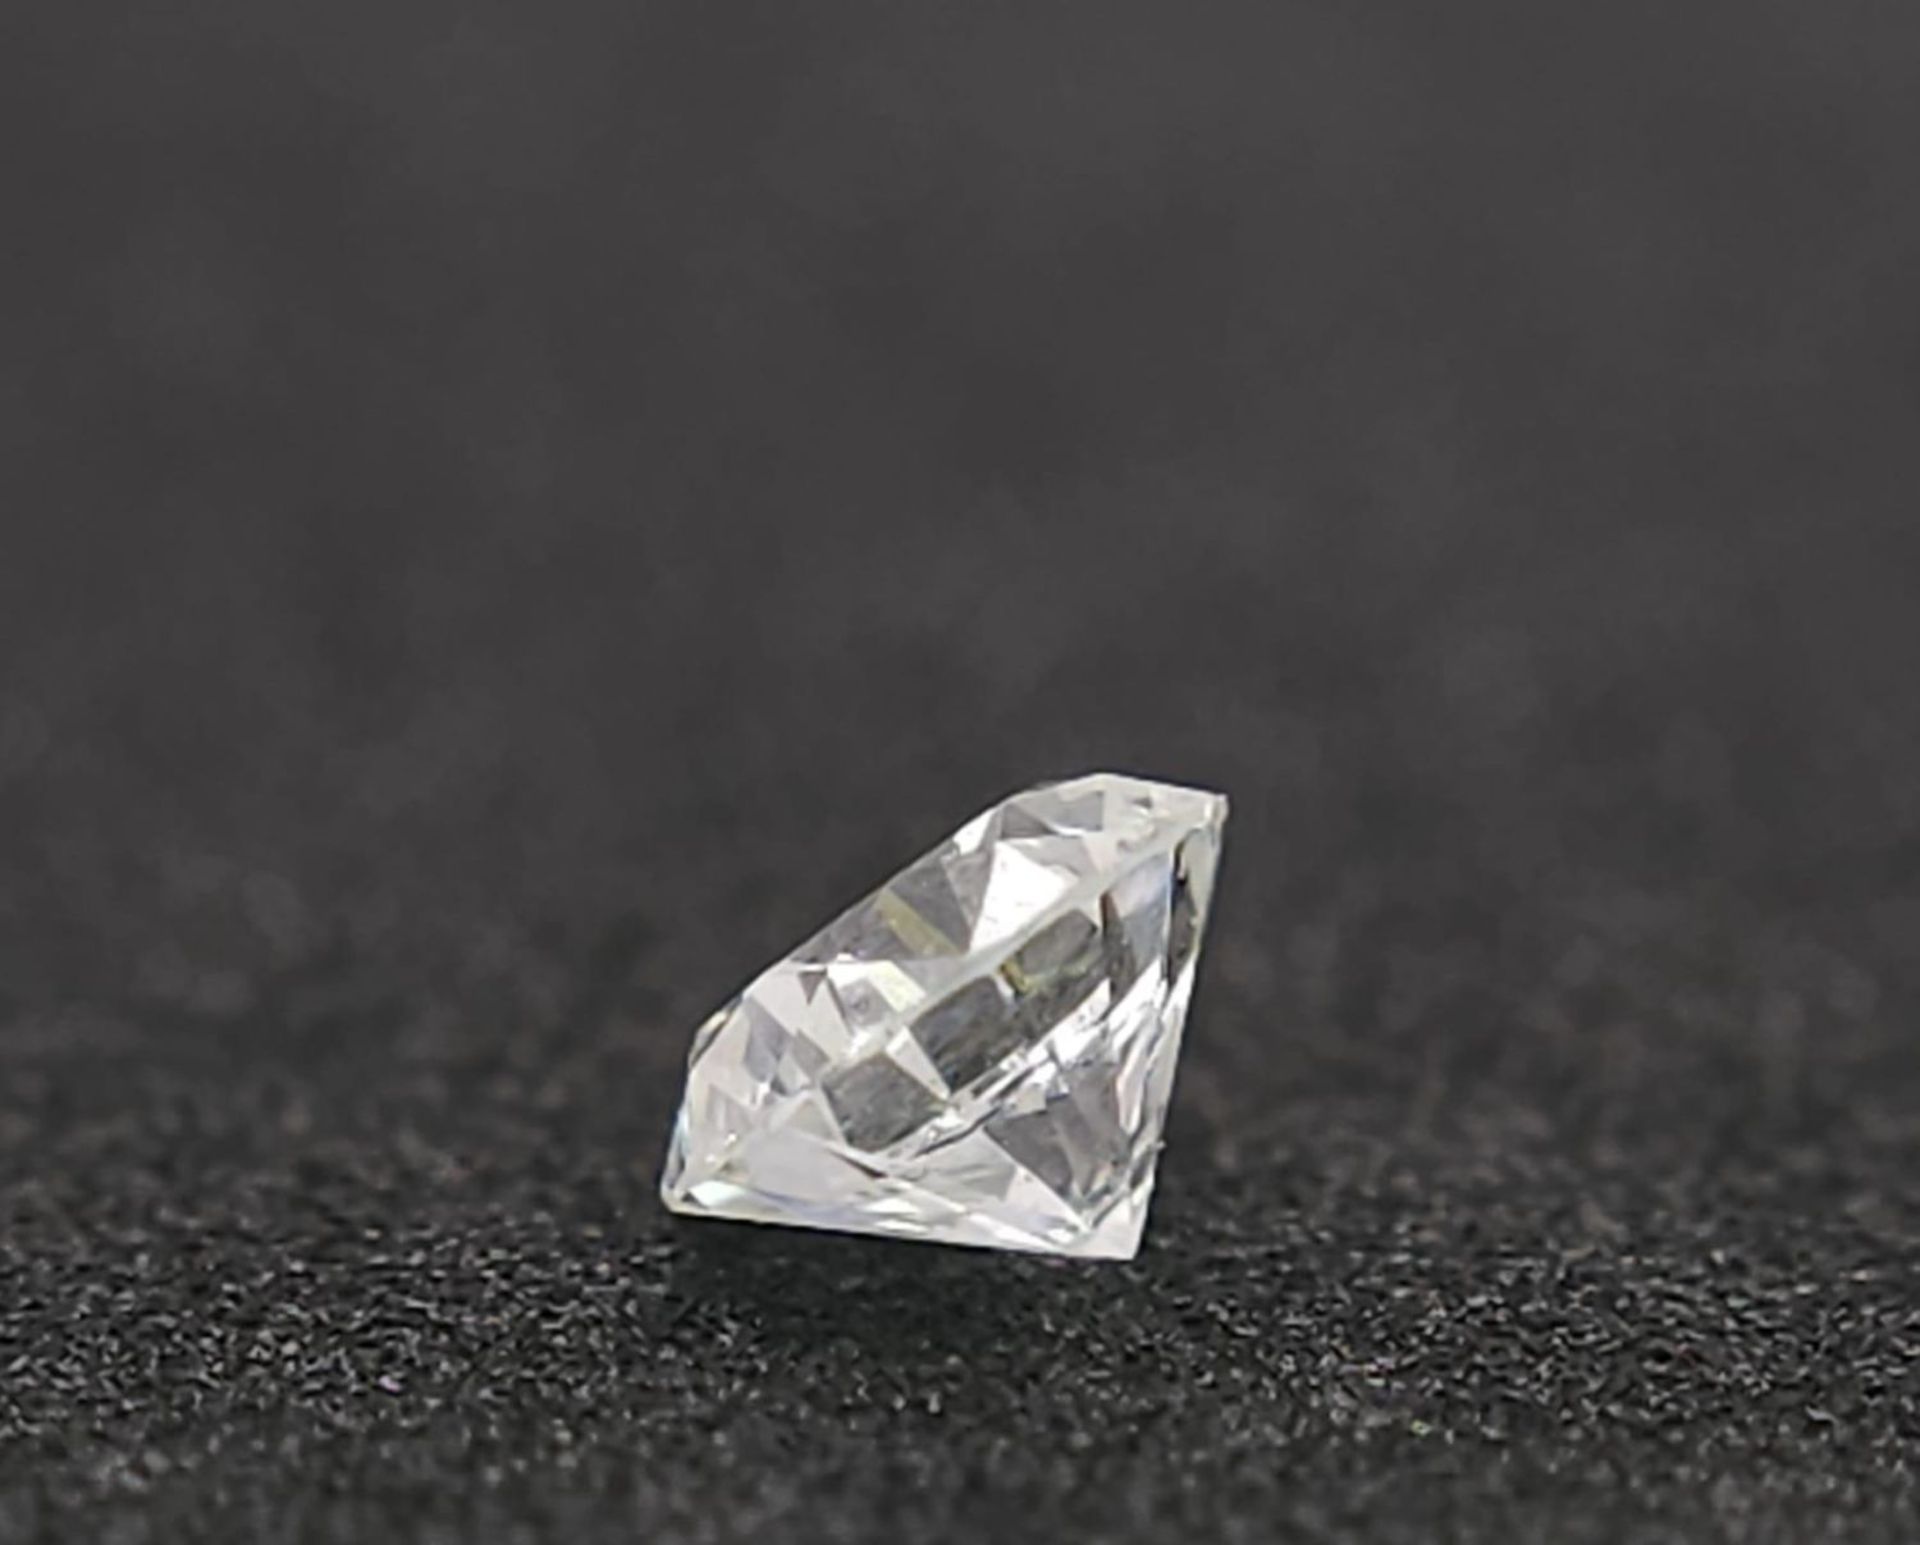 A ROUND BRILLIANT CUT DIAMOND .43ct VS2 COLOUR F , WITH CERTIFICATE . - Image 5 of 12